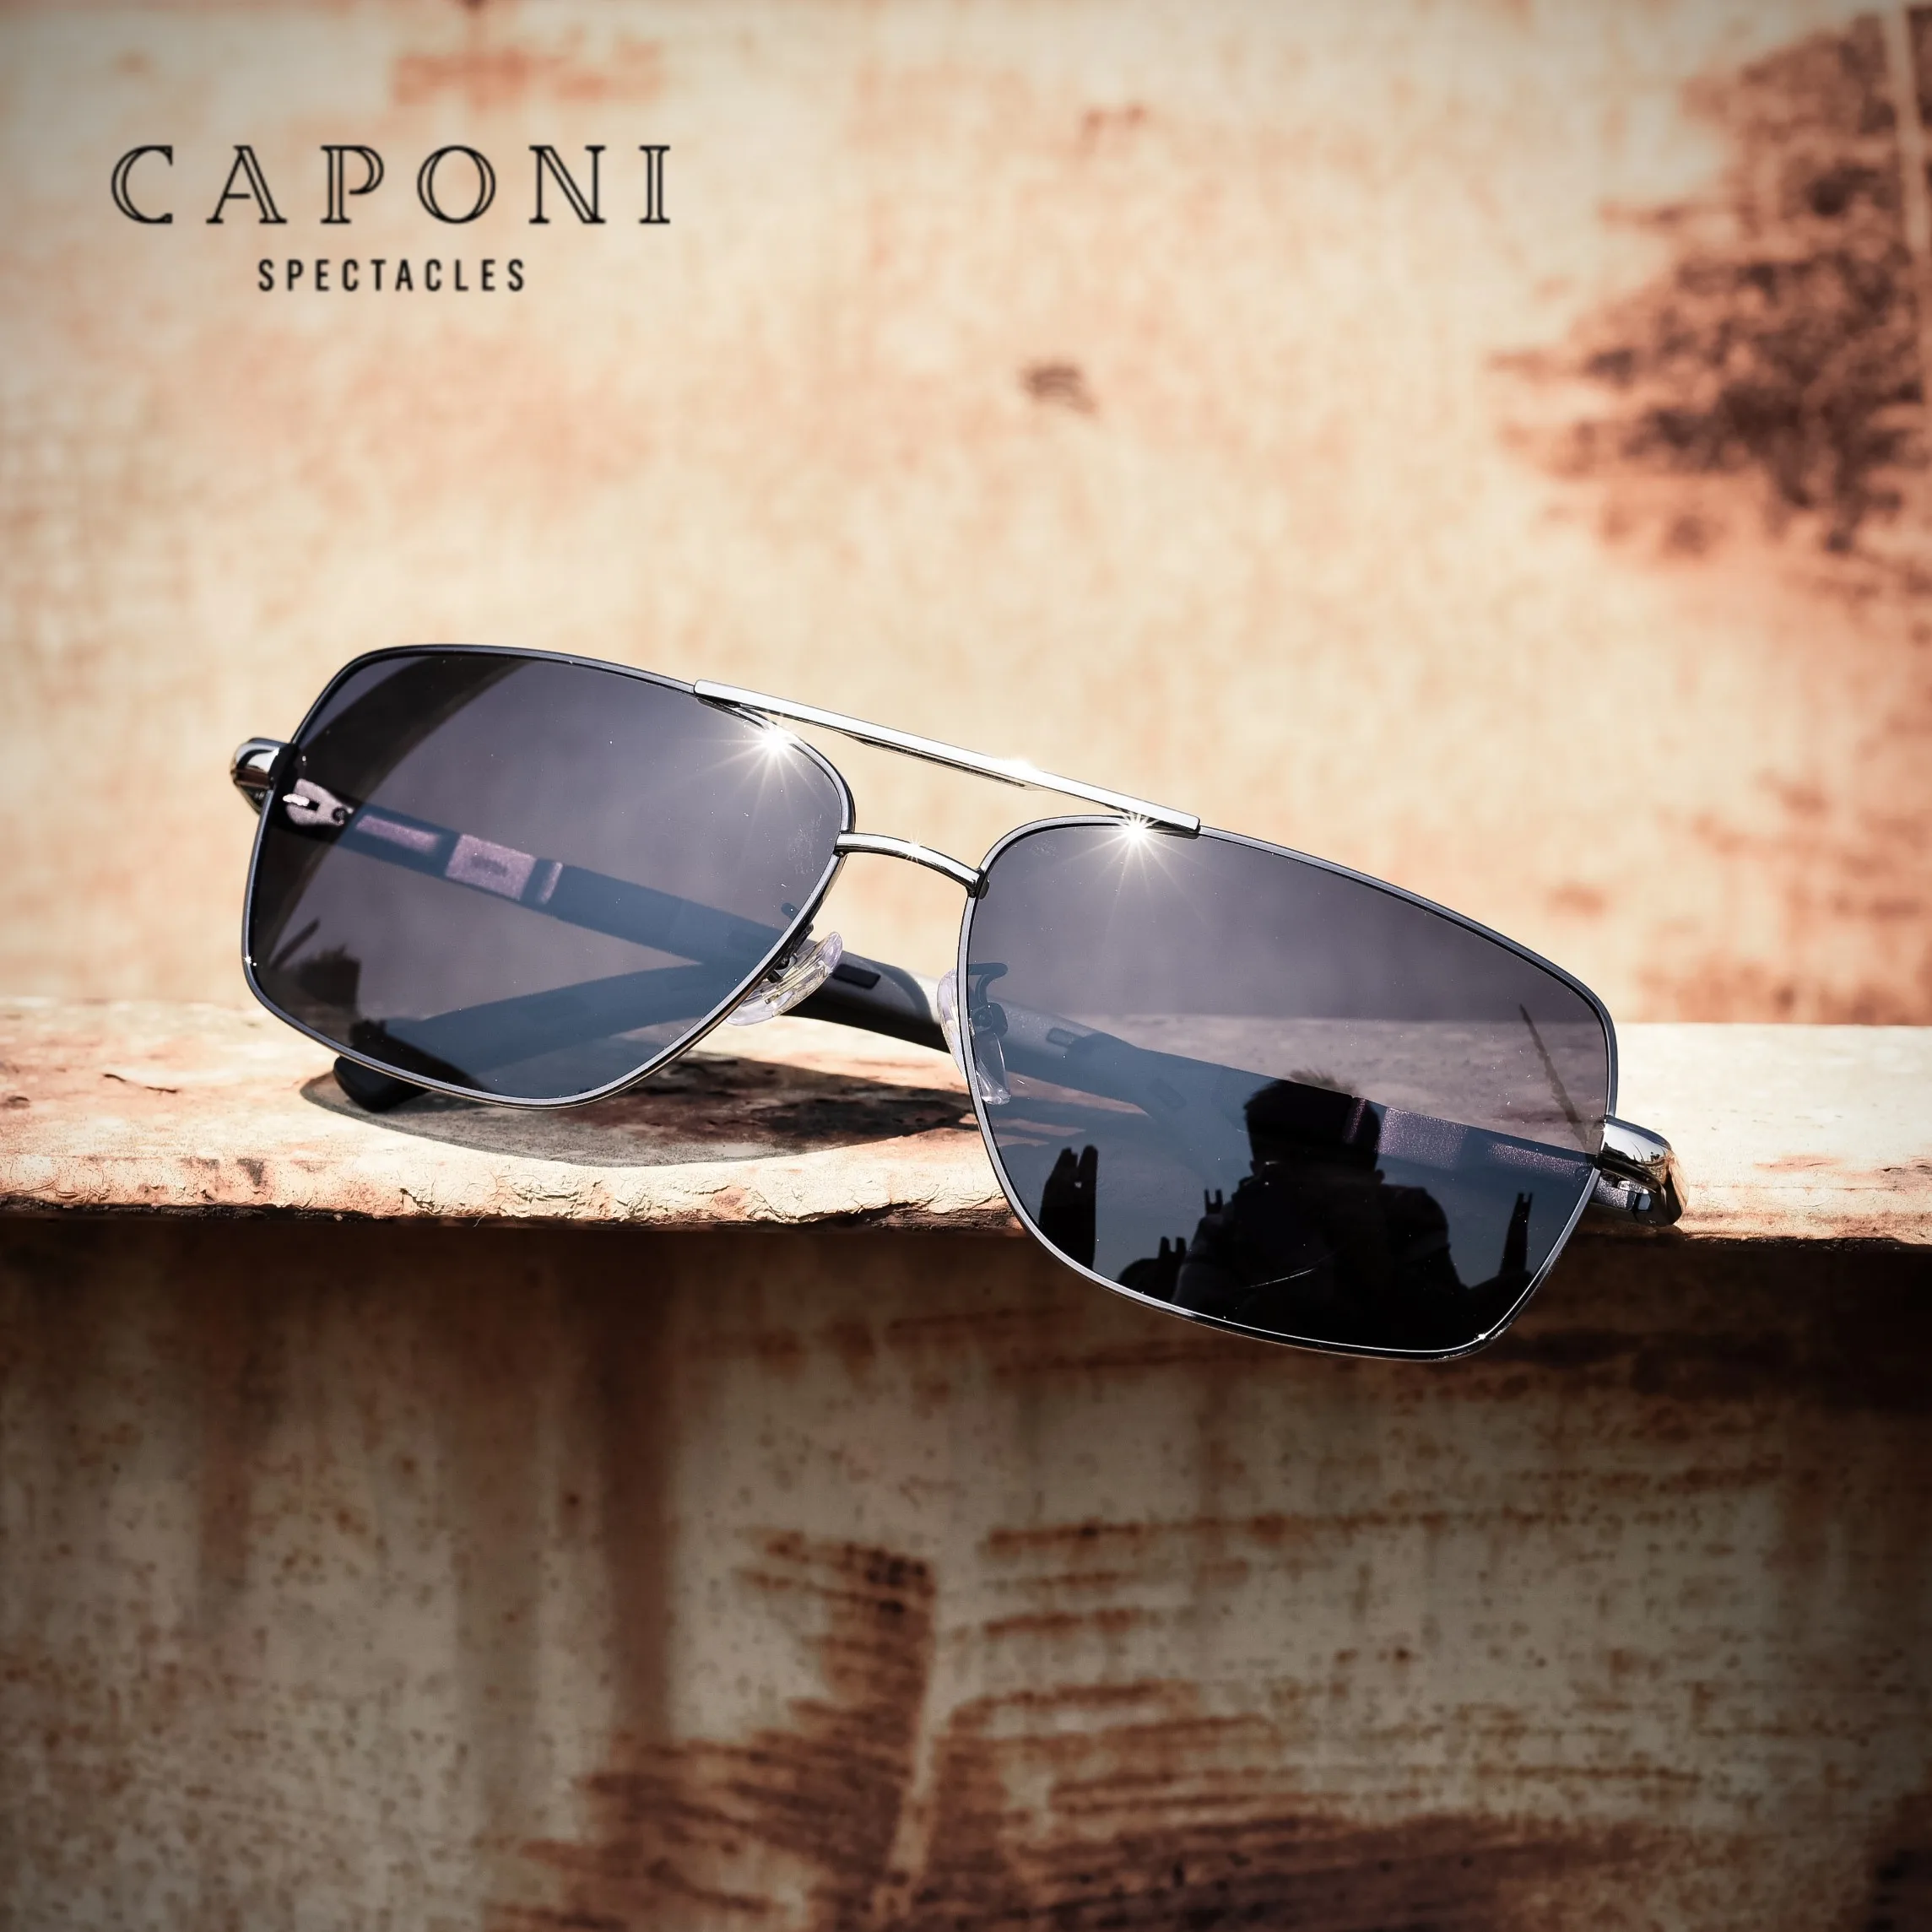 

CAPONI Square Men's Sunglasses Photochromic Metal Frame Driving Men Glasses Anti-Glare UV Filter Polarized Sun Glasses BS8724